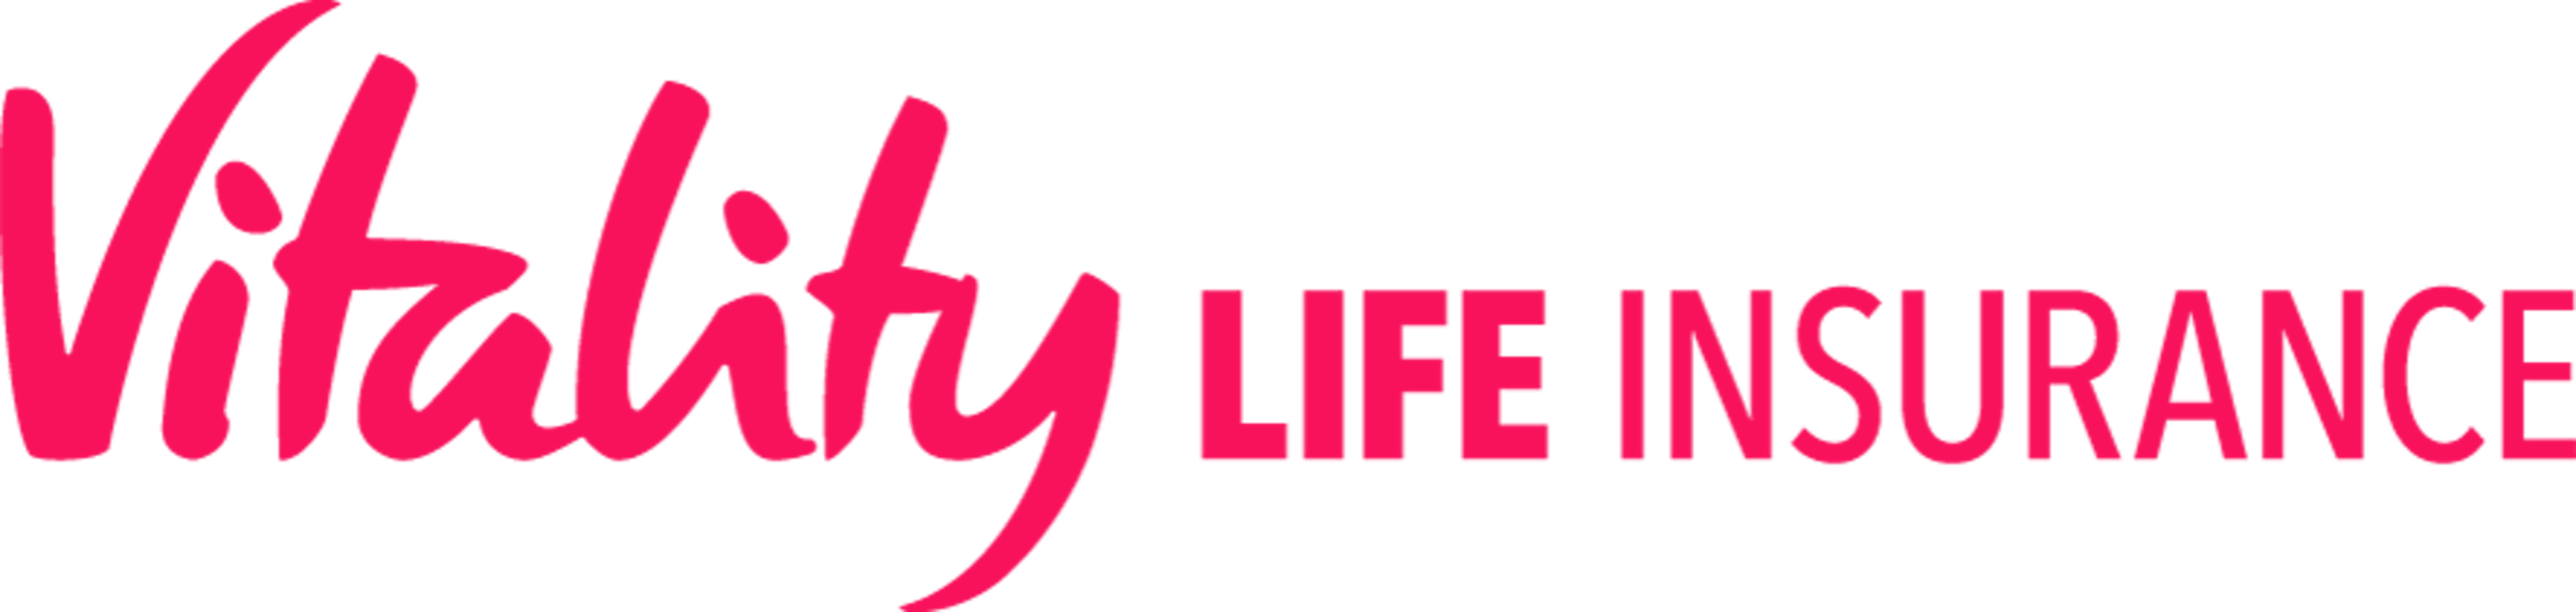 Vitality life insurance | Bankrate UK